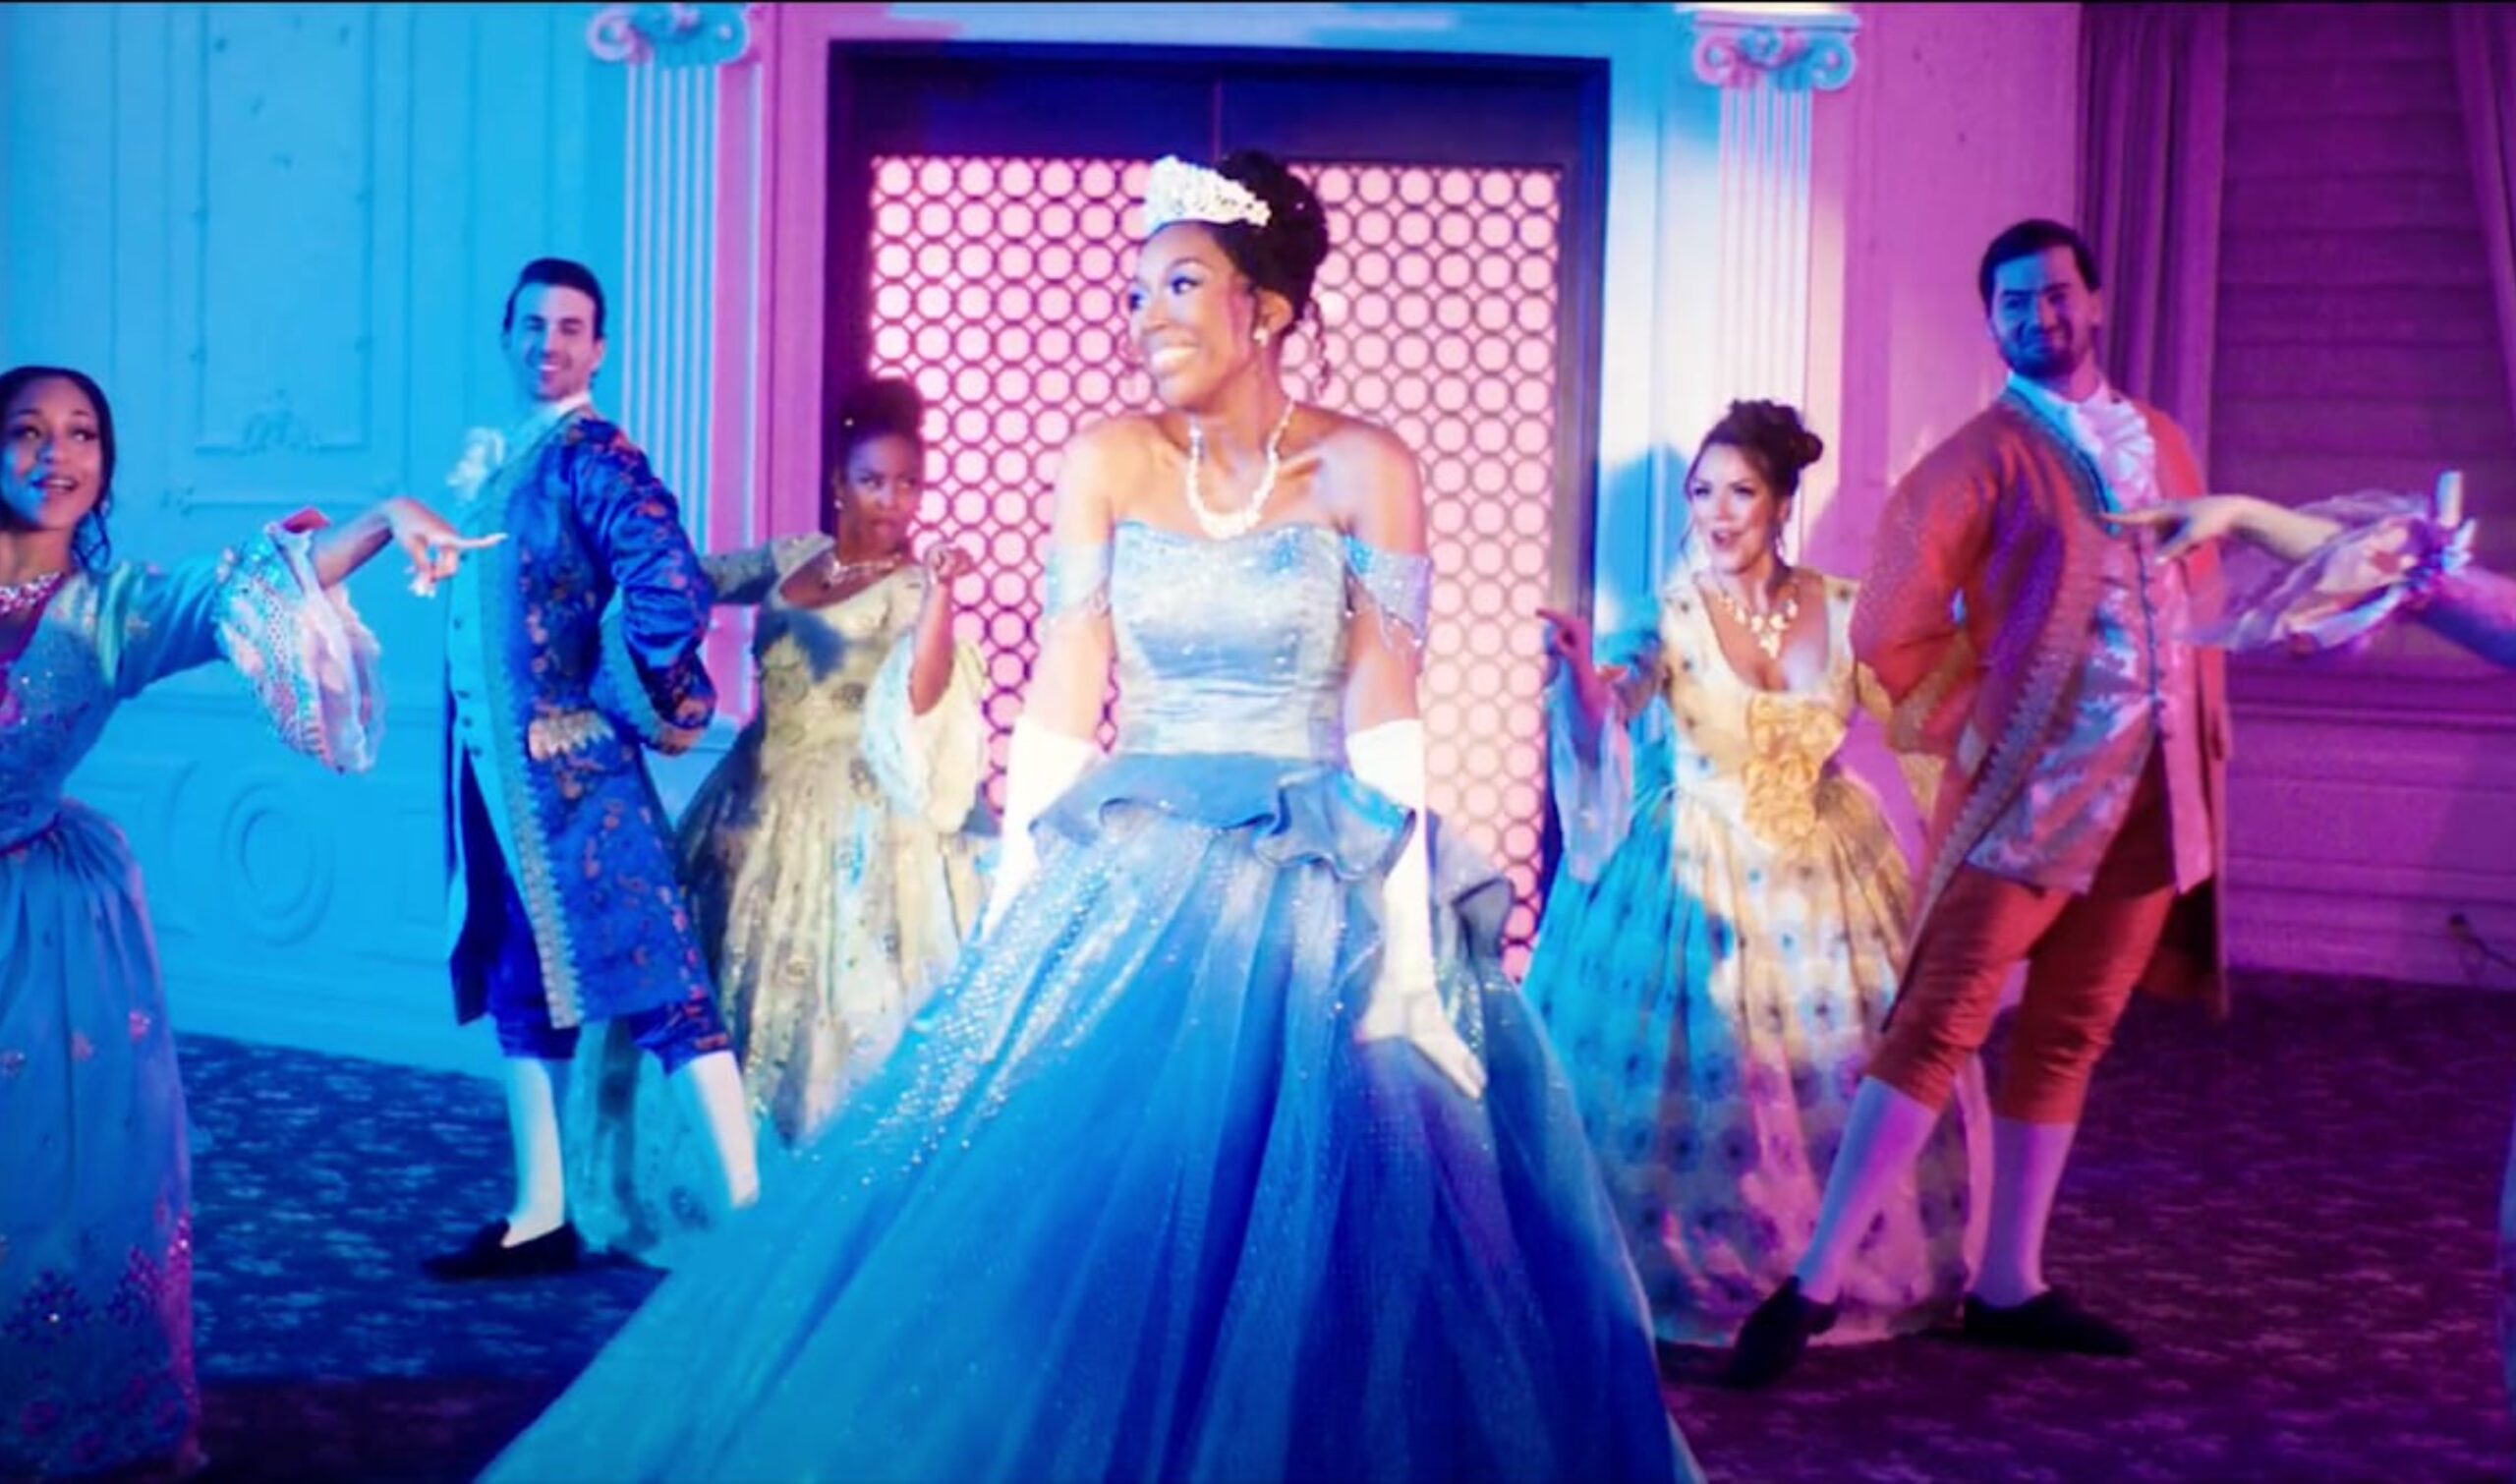 Brandy as Cinderella in the Cinderella Medley by Todrick Hall